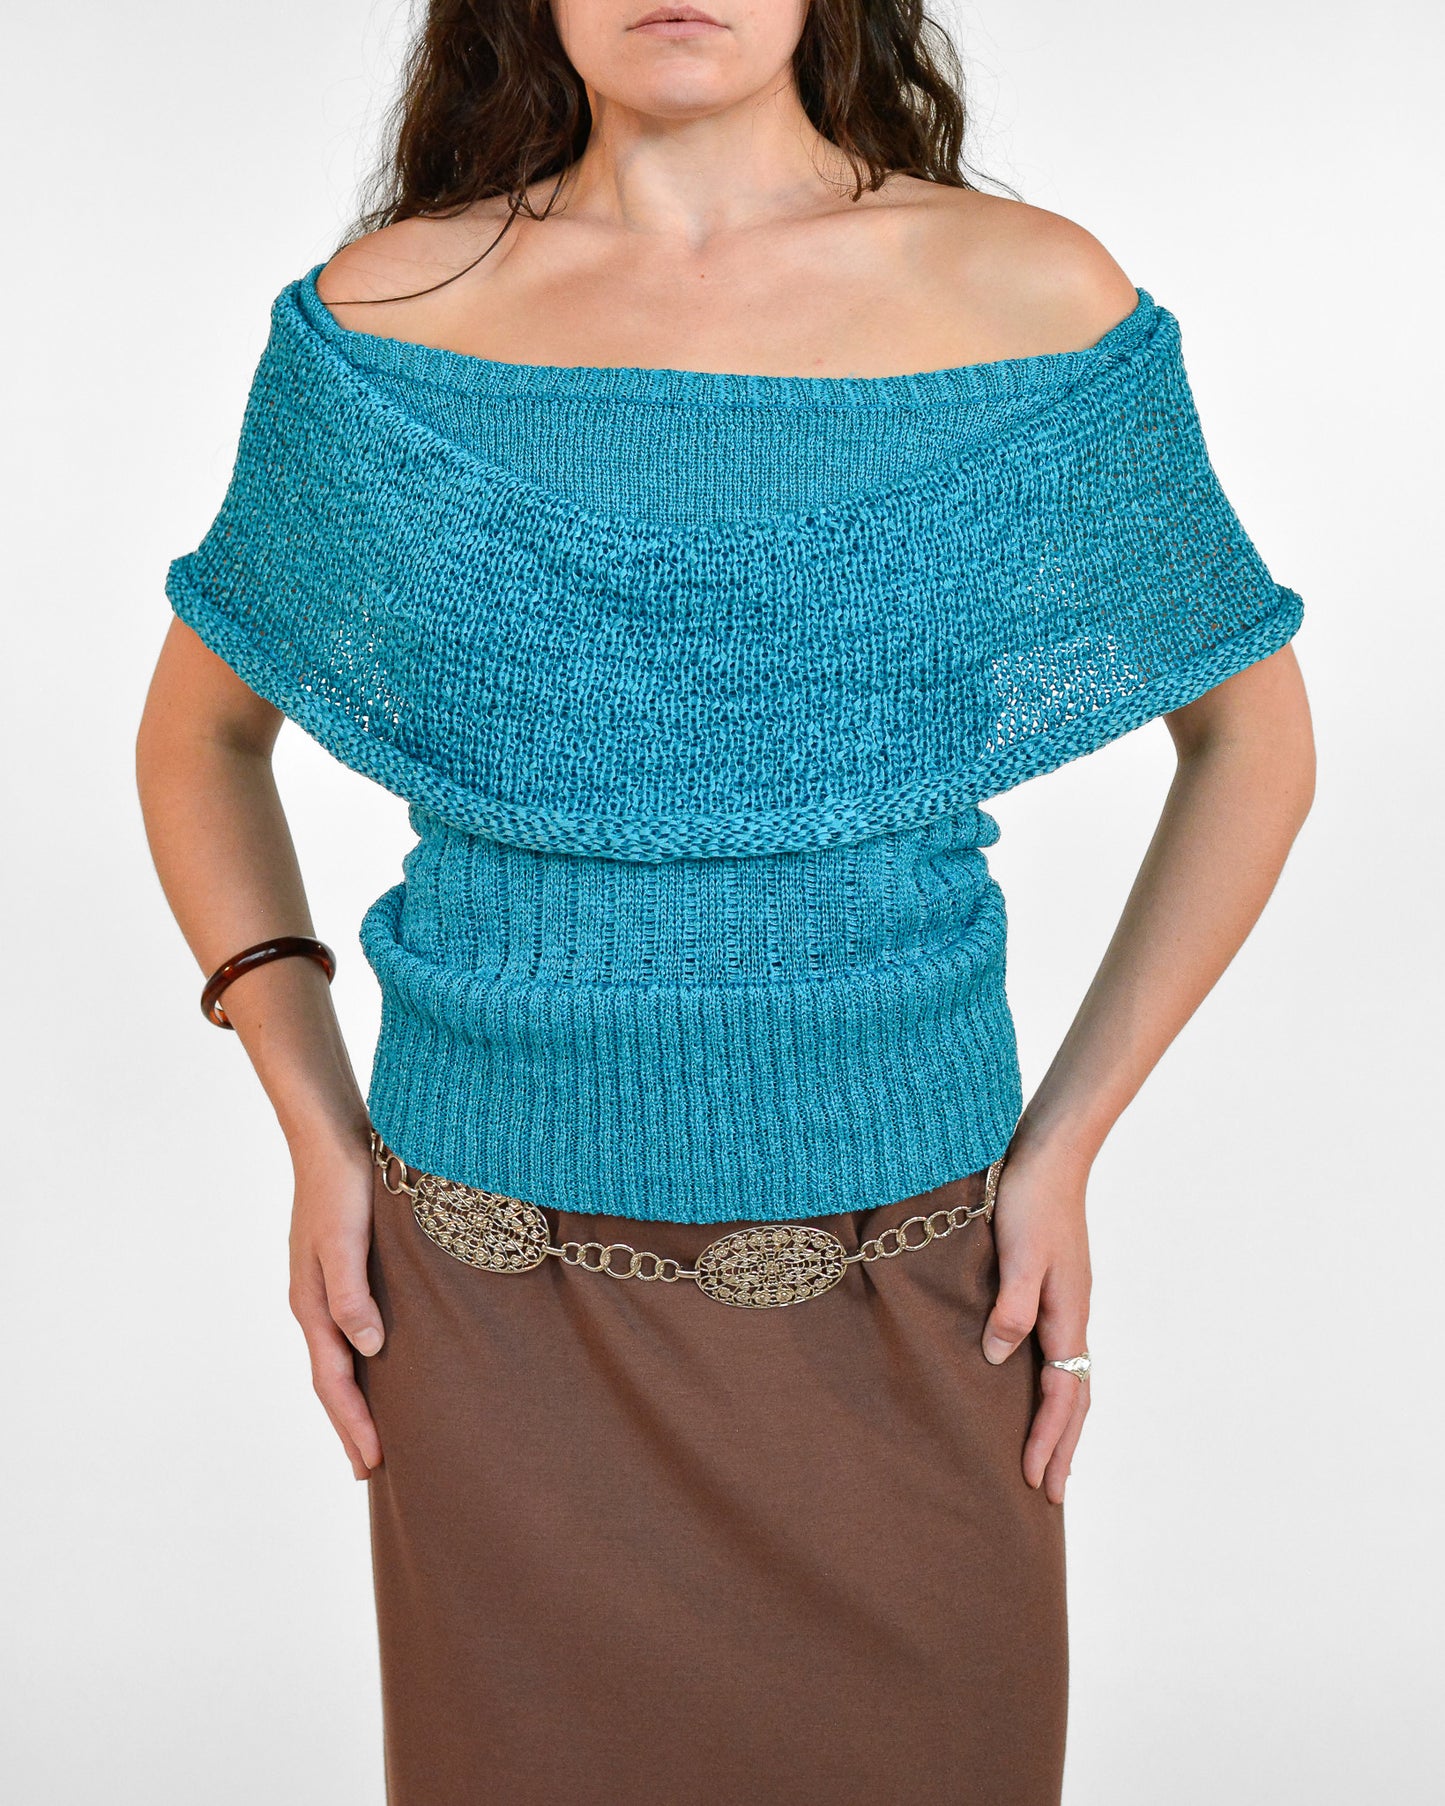 Vintage aqua blue knit draped top.